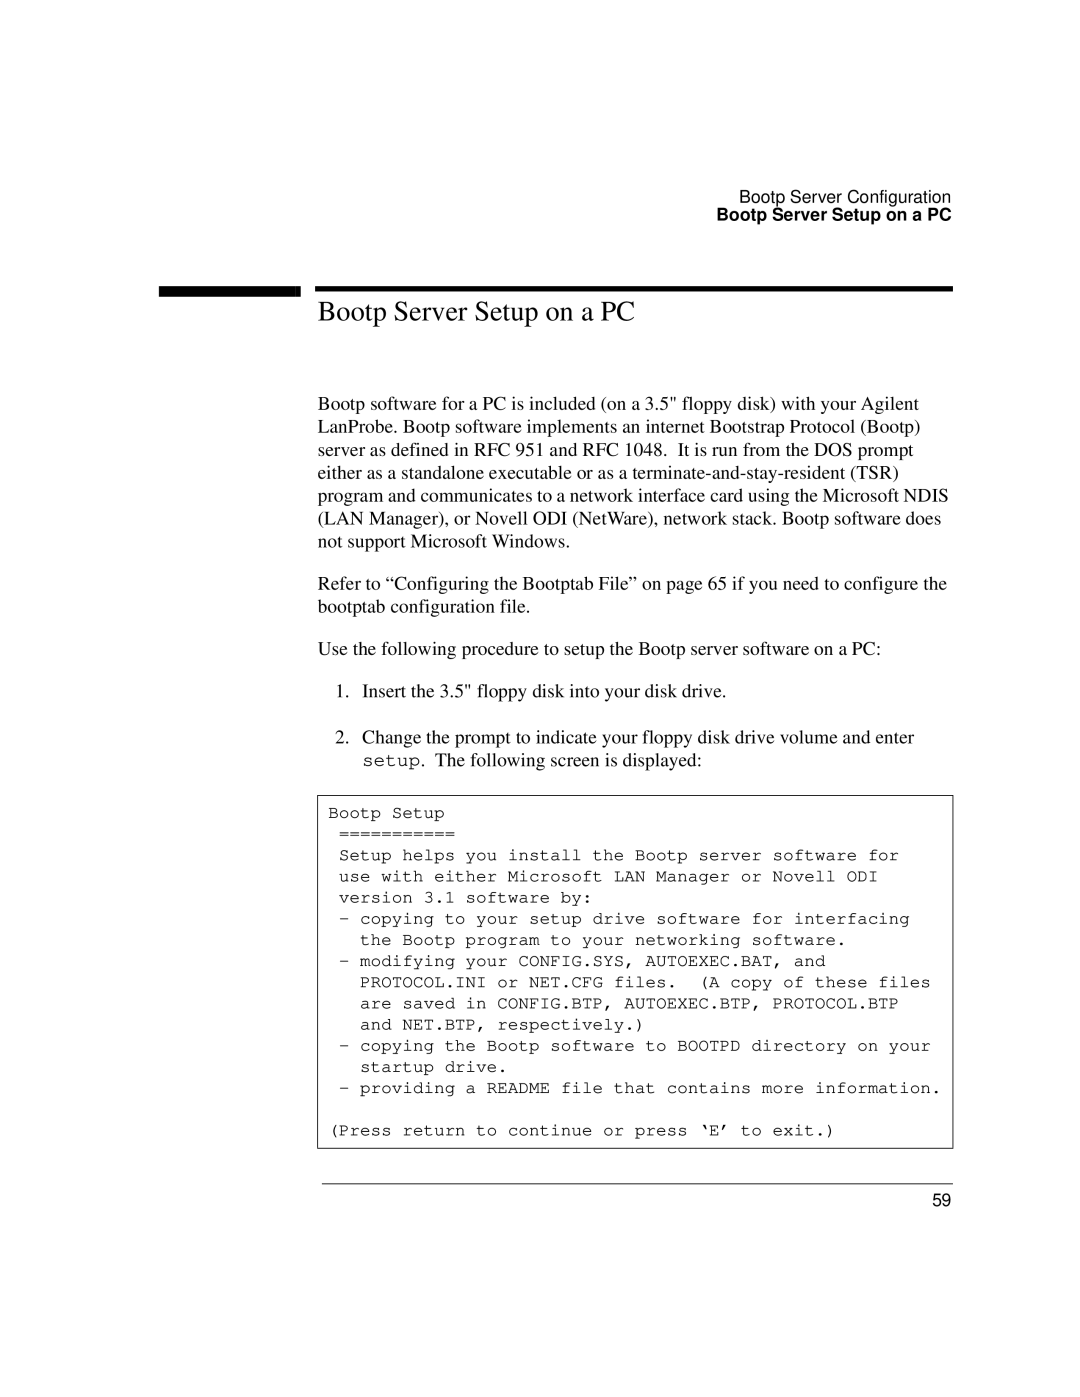 IBM 4986B LanProbe manual Bootp Server Setup on a PC 